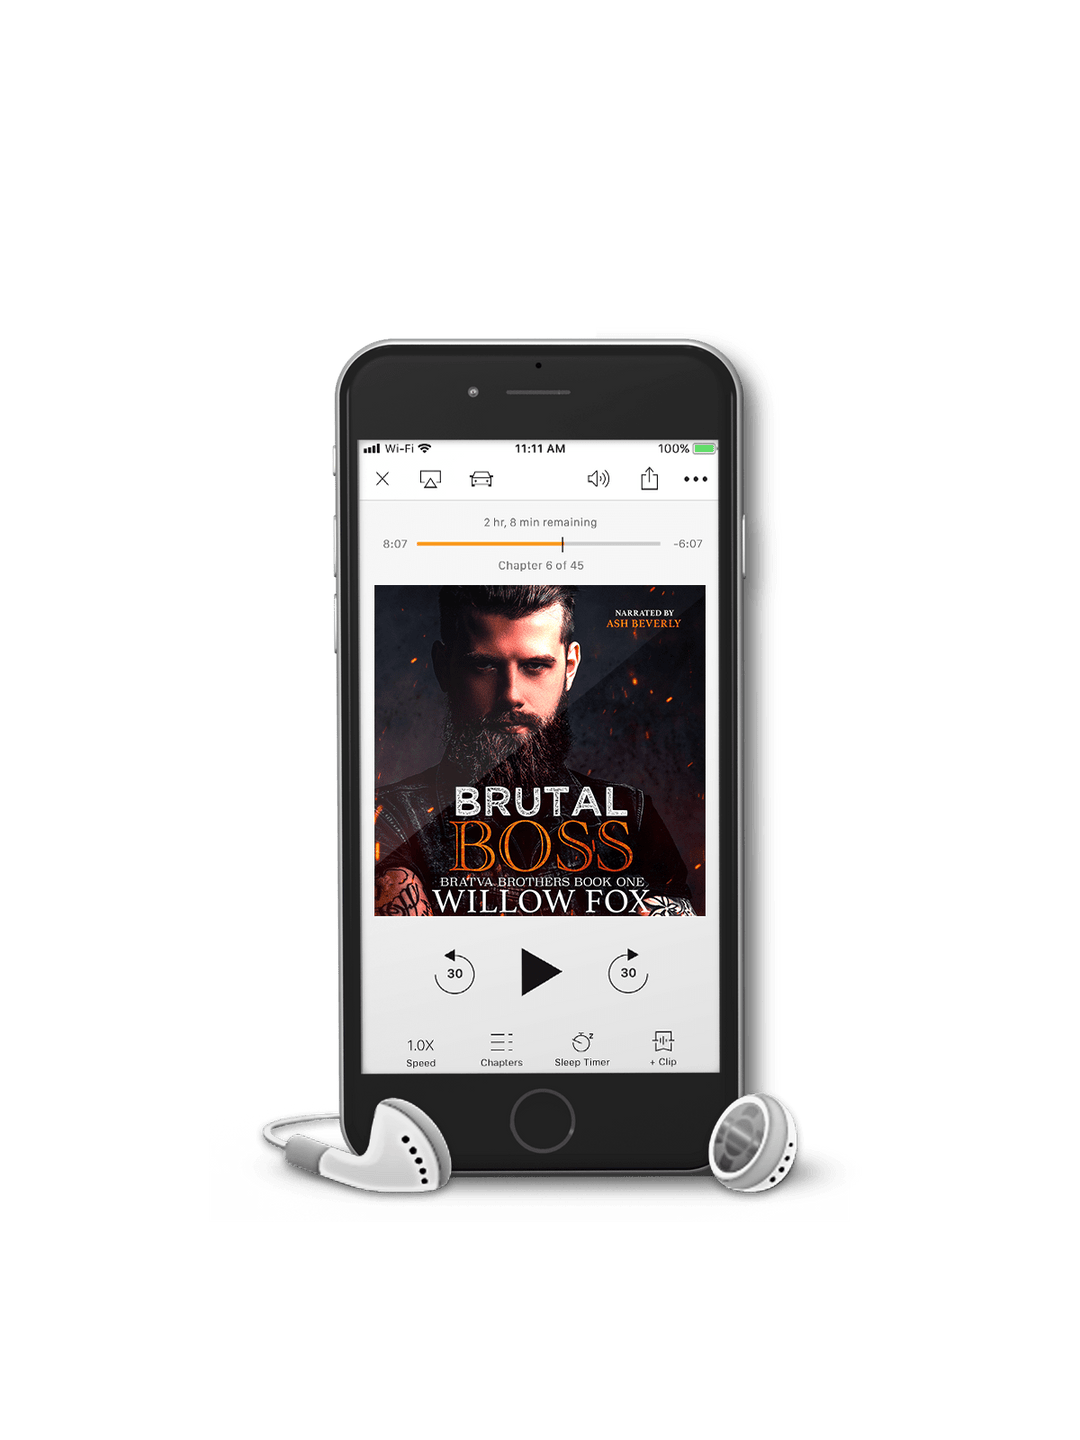 Author Willow Fox audiobooks audiobook Brutal Boss (audiobook)